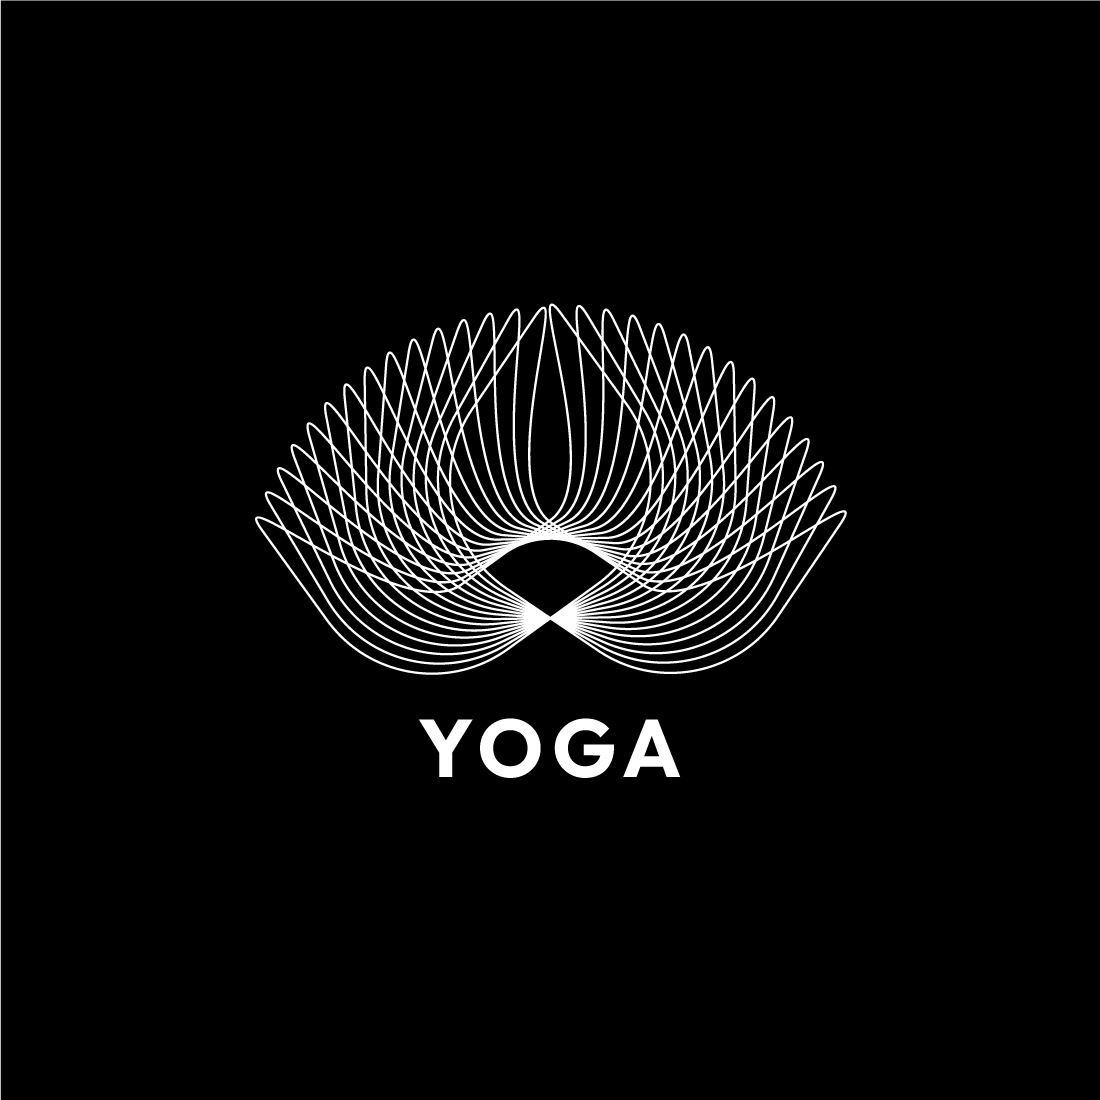 Line Art Yoga Design Bundle preview image.